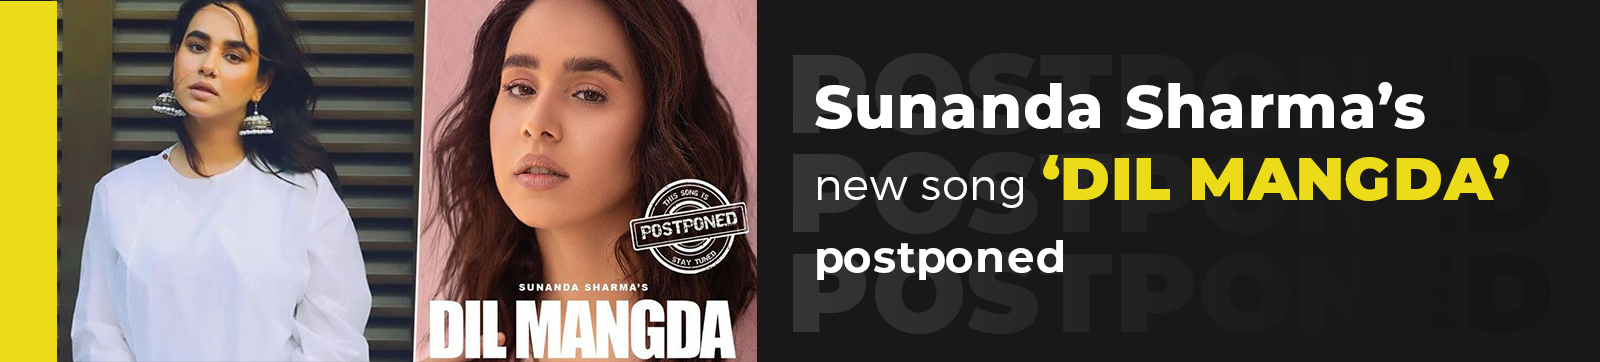 1600px x 362px - Sunanda Sharma's new song 'Dil Mangda' postponed - Blog